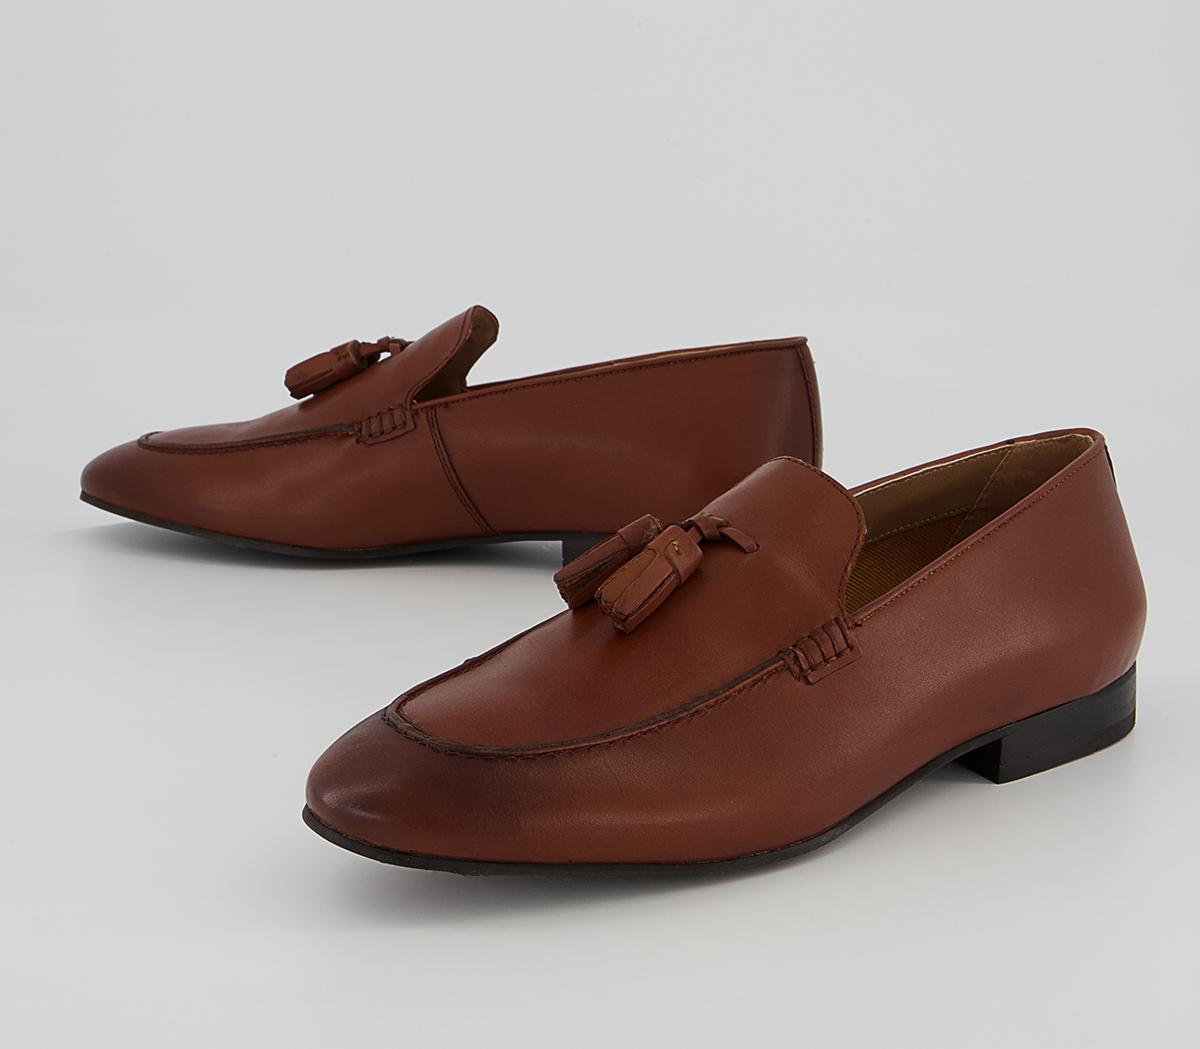 Hudson London Bolton Tassel Loafers Tan Mens Smart Shoes 5206